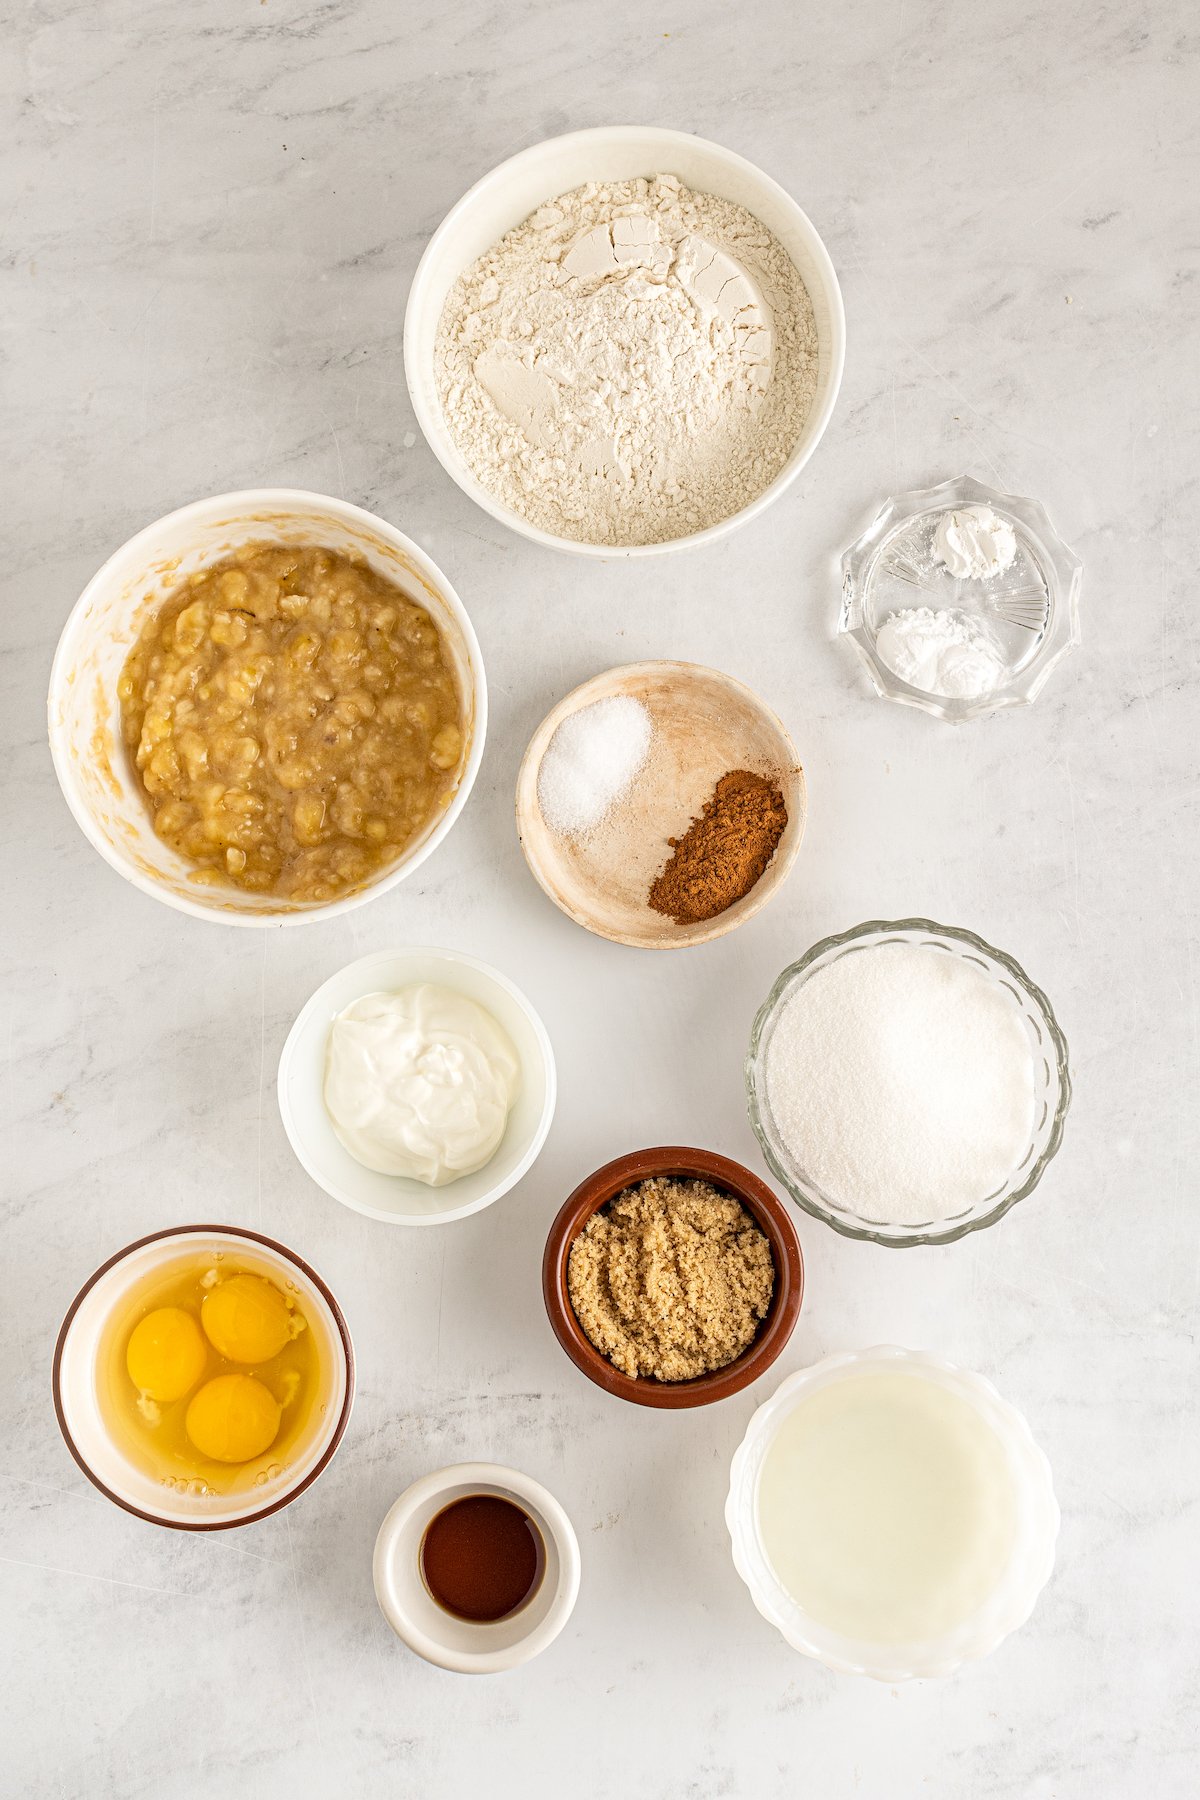 From top: Flour, baking soda, baking powder, mashed banana, salt, cinnamon, sugar, sour cream, brown sugar, eggs, vanilla, oil.